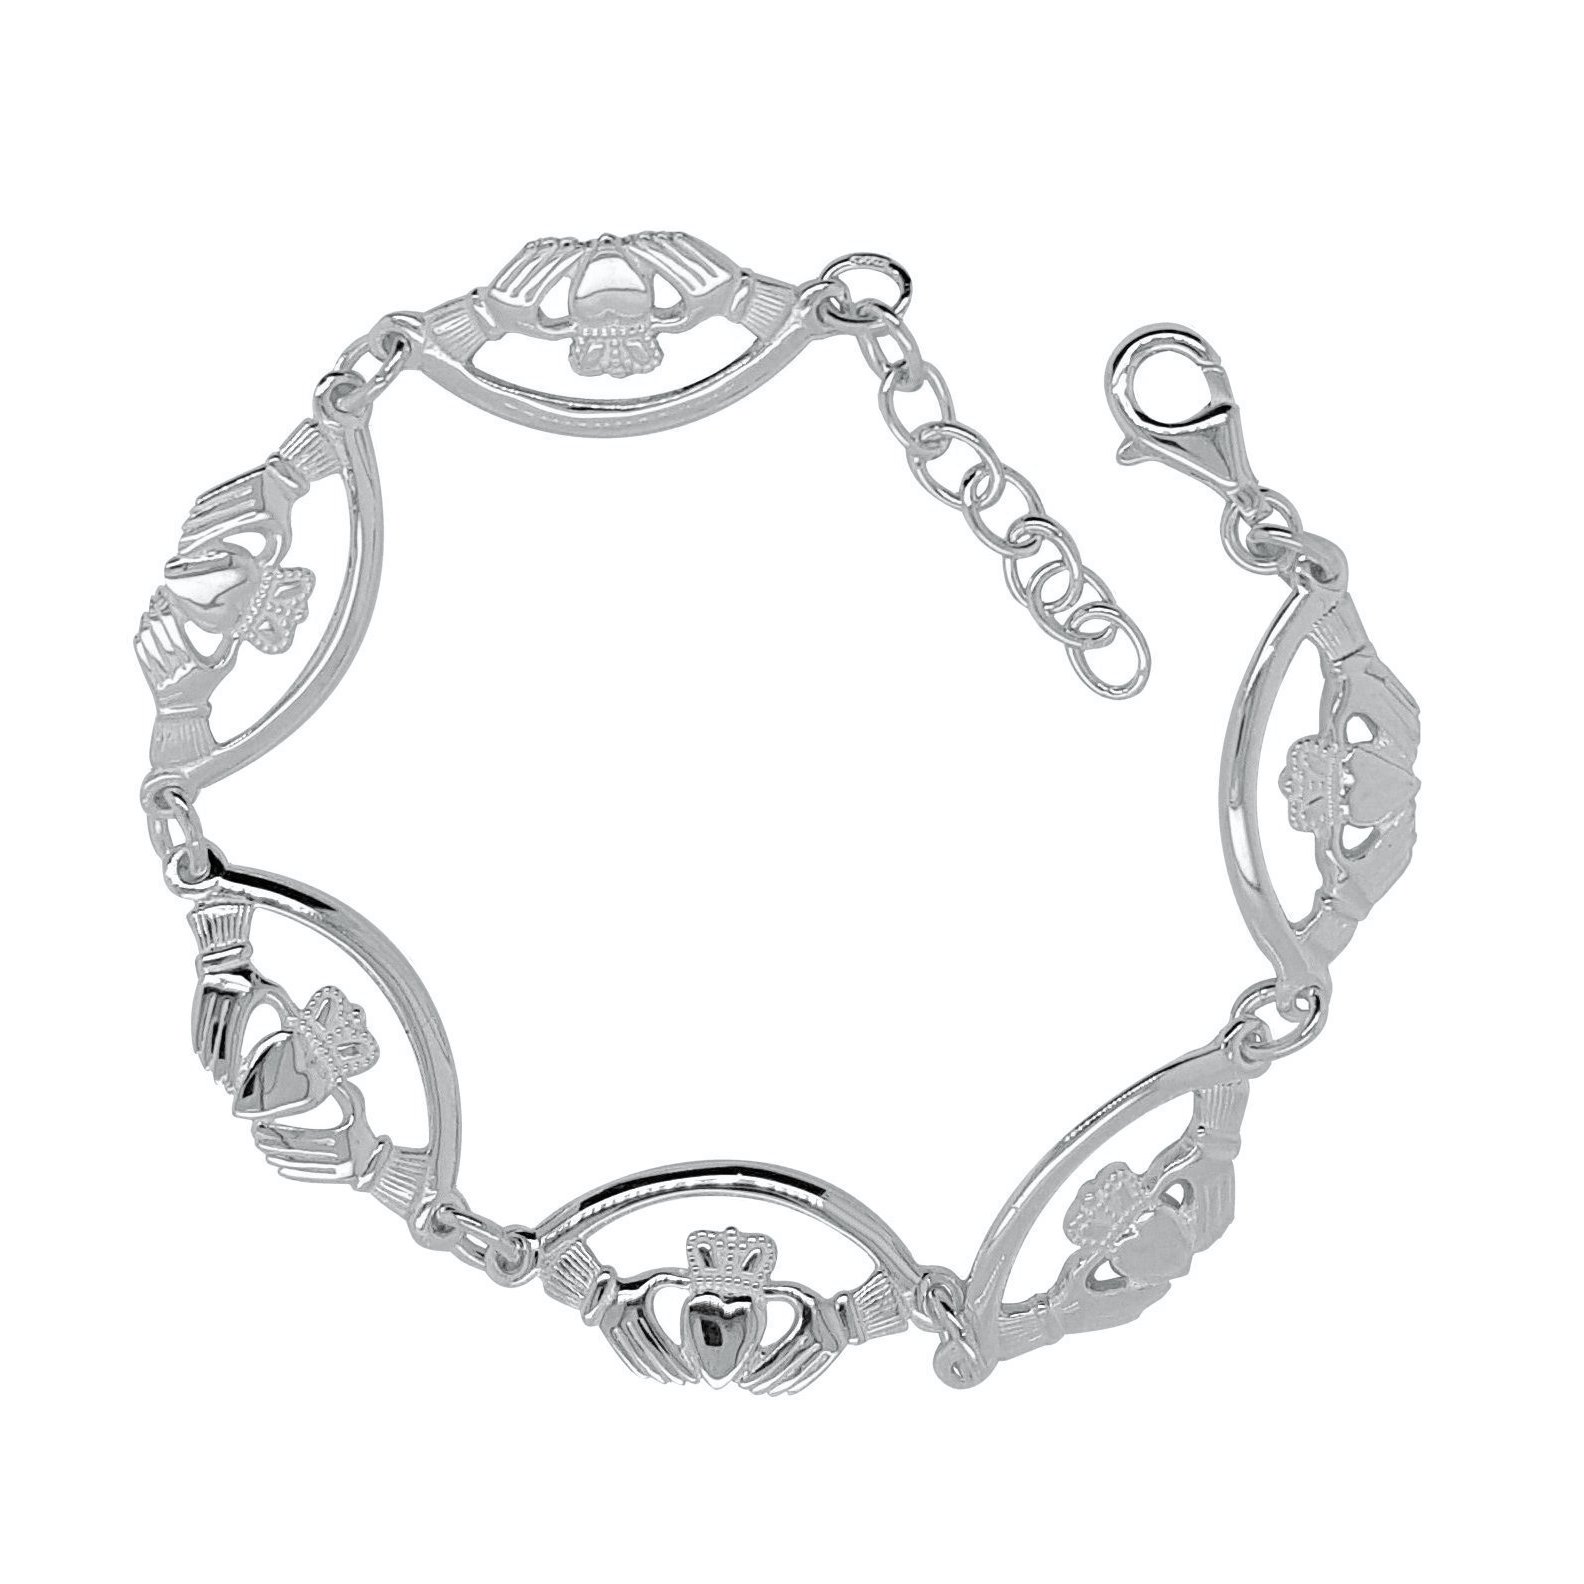 Claddagh Silver Bracelet 6 piece with extender8407